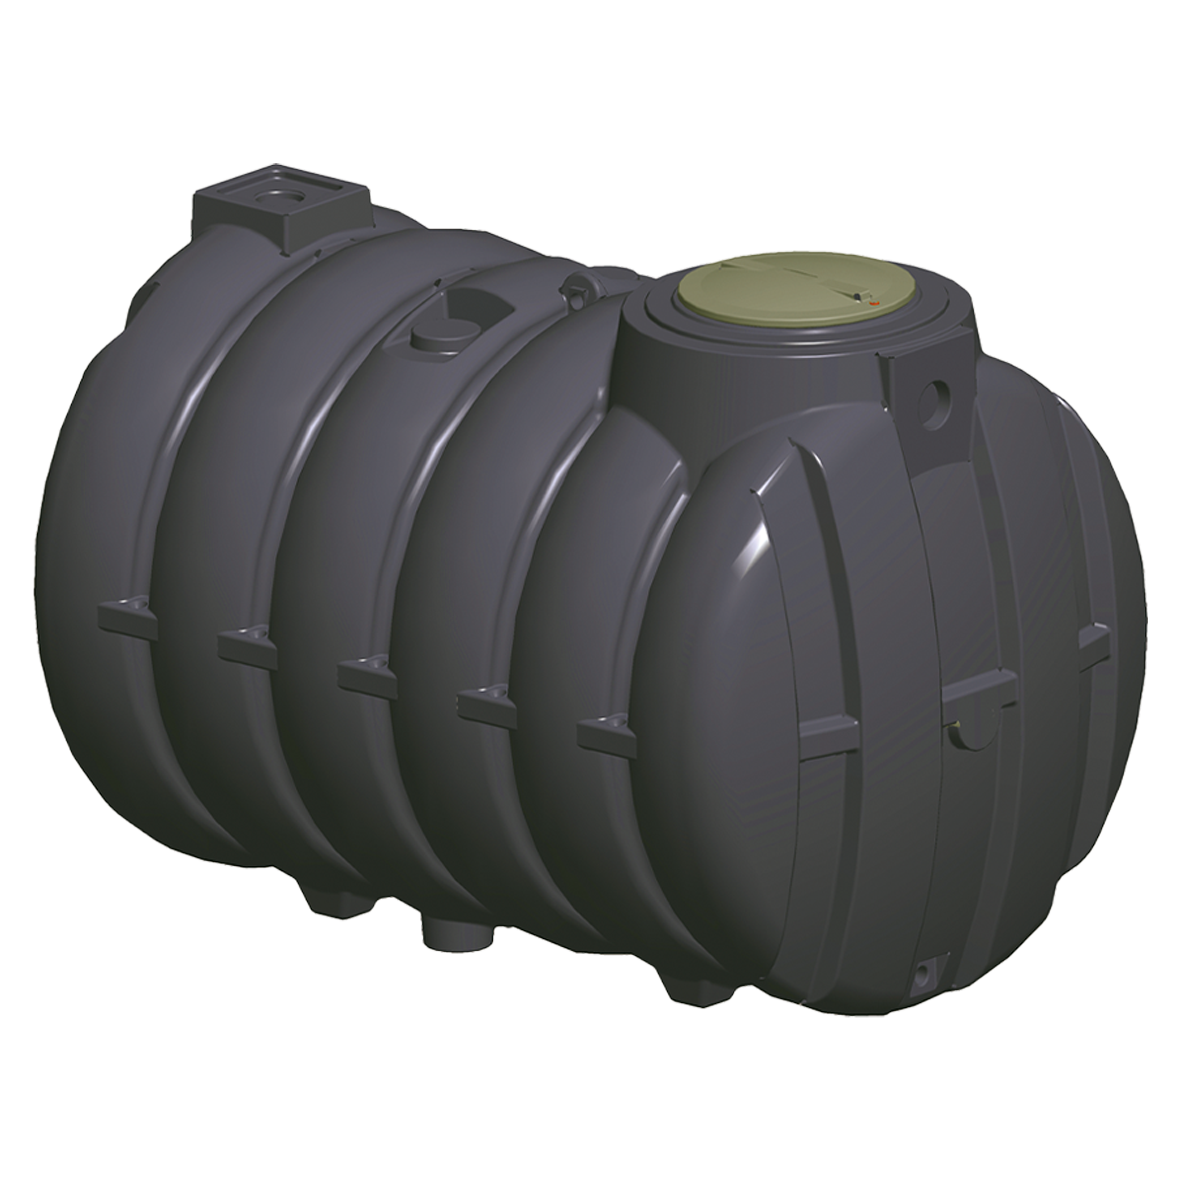 [6020] Polyethylene water storage tank 3 to 8 m3 - Main image